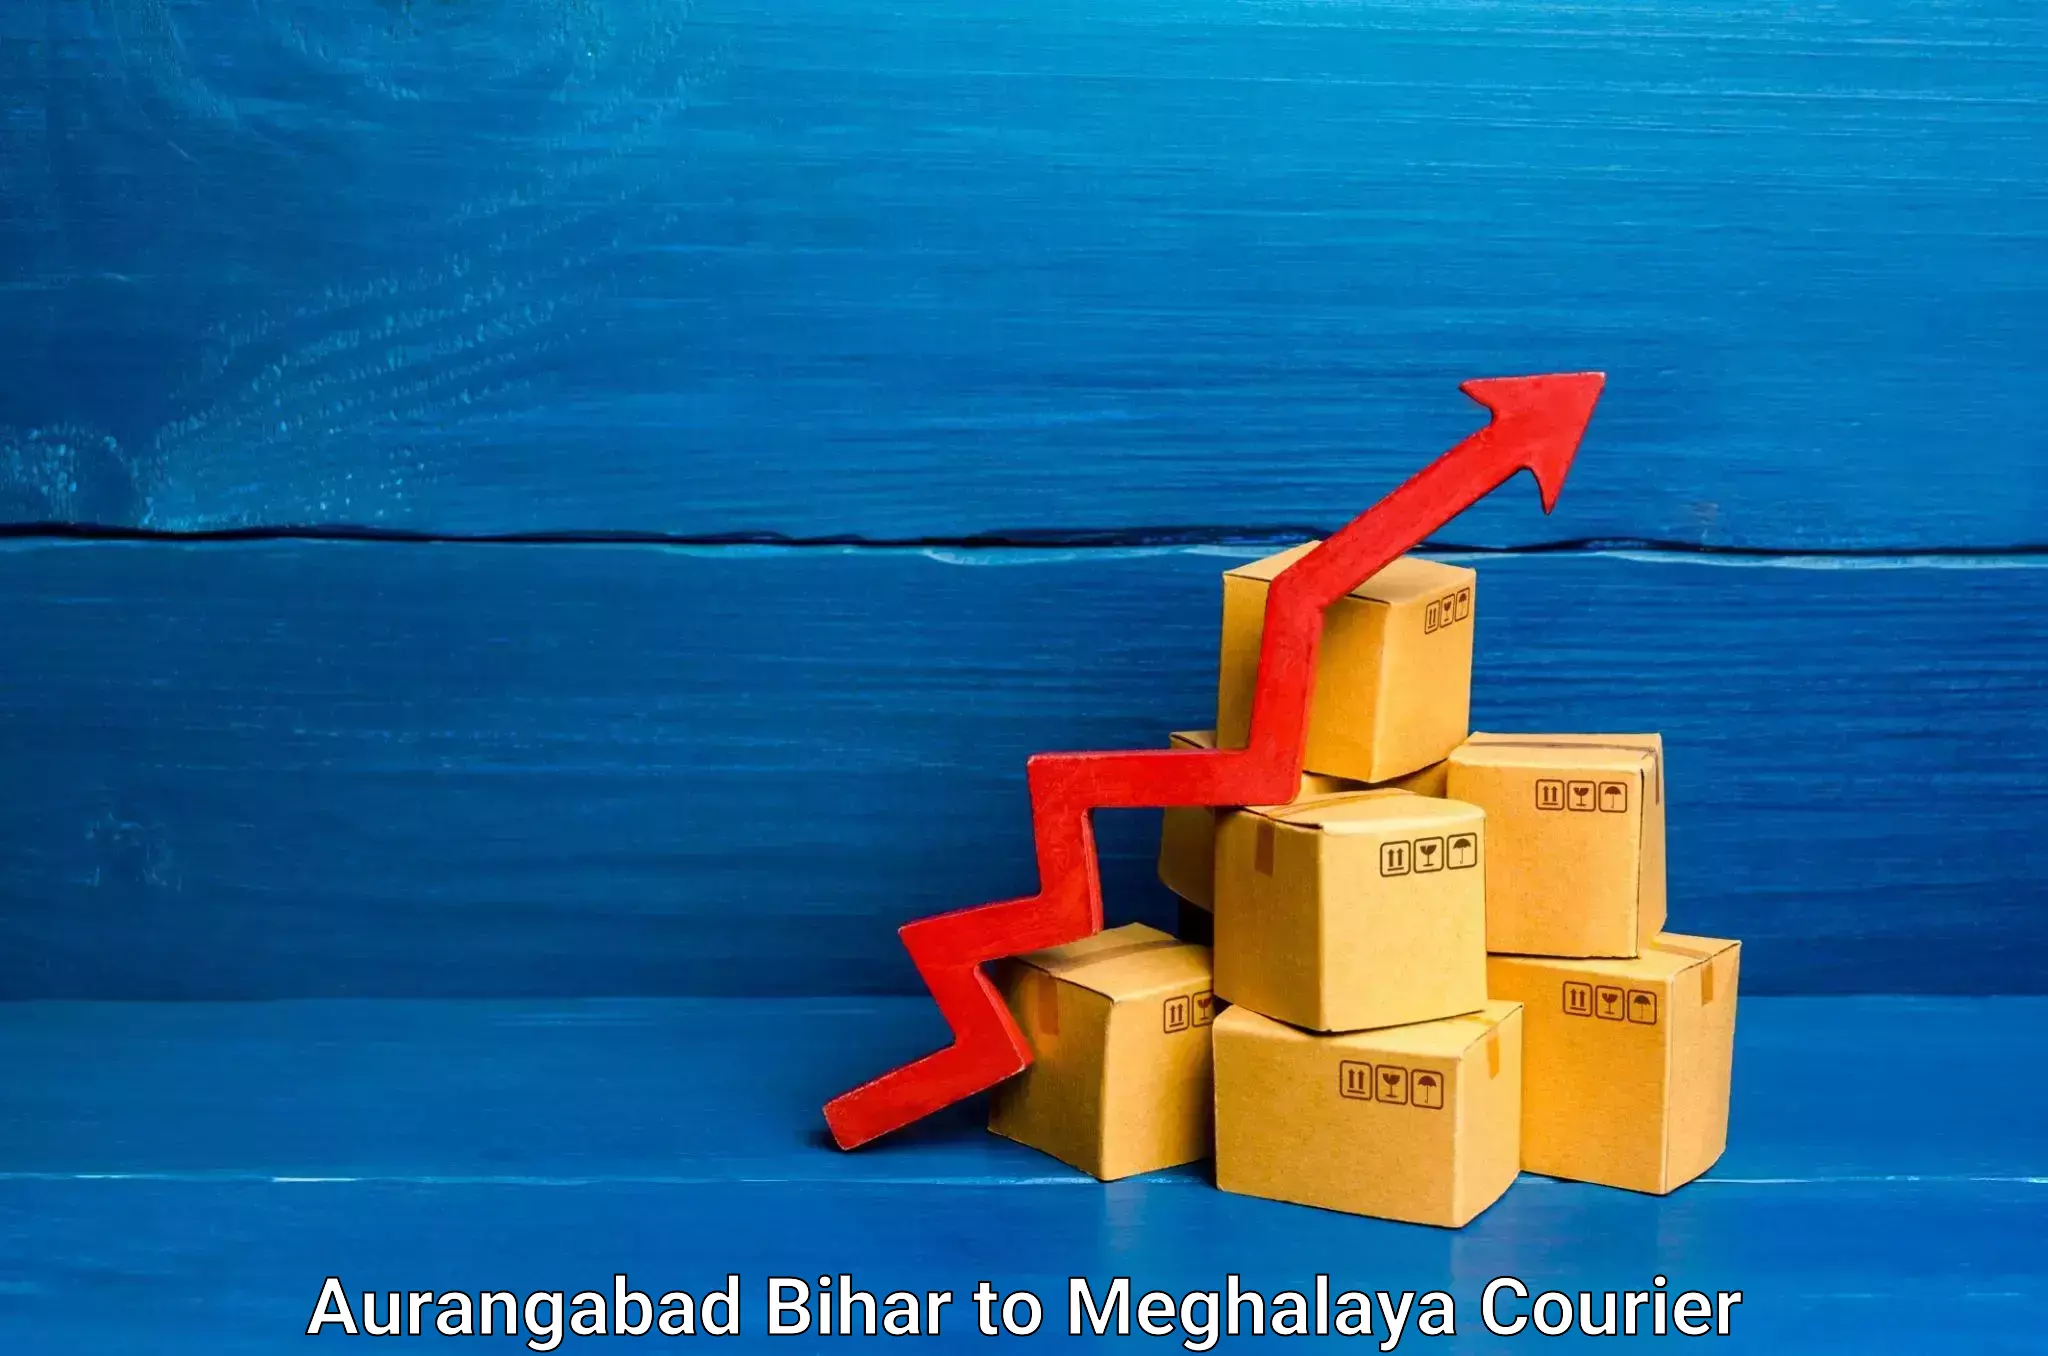 Furniture transport service Aurangabad Bihar to Meghalaya